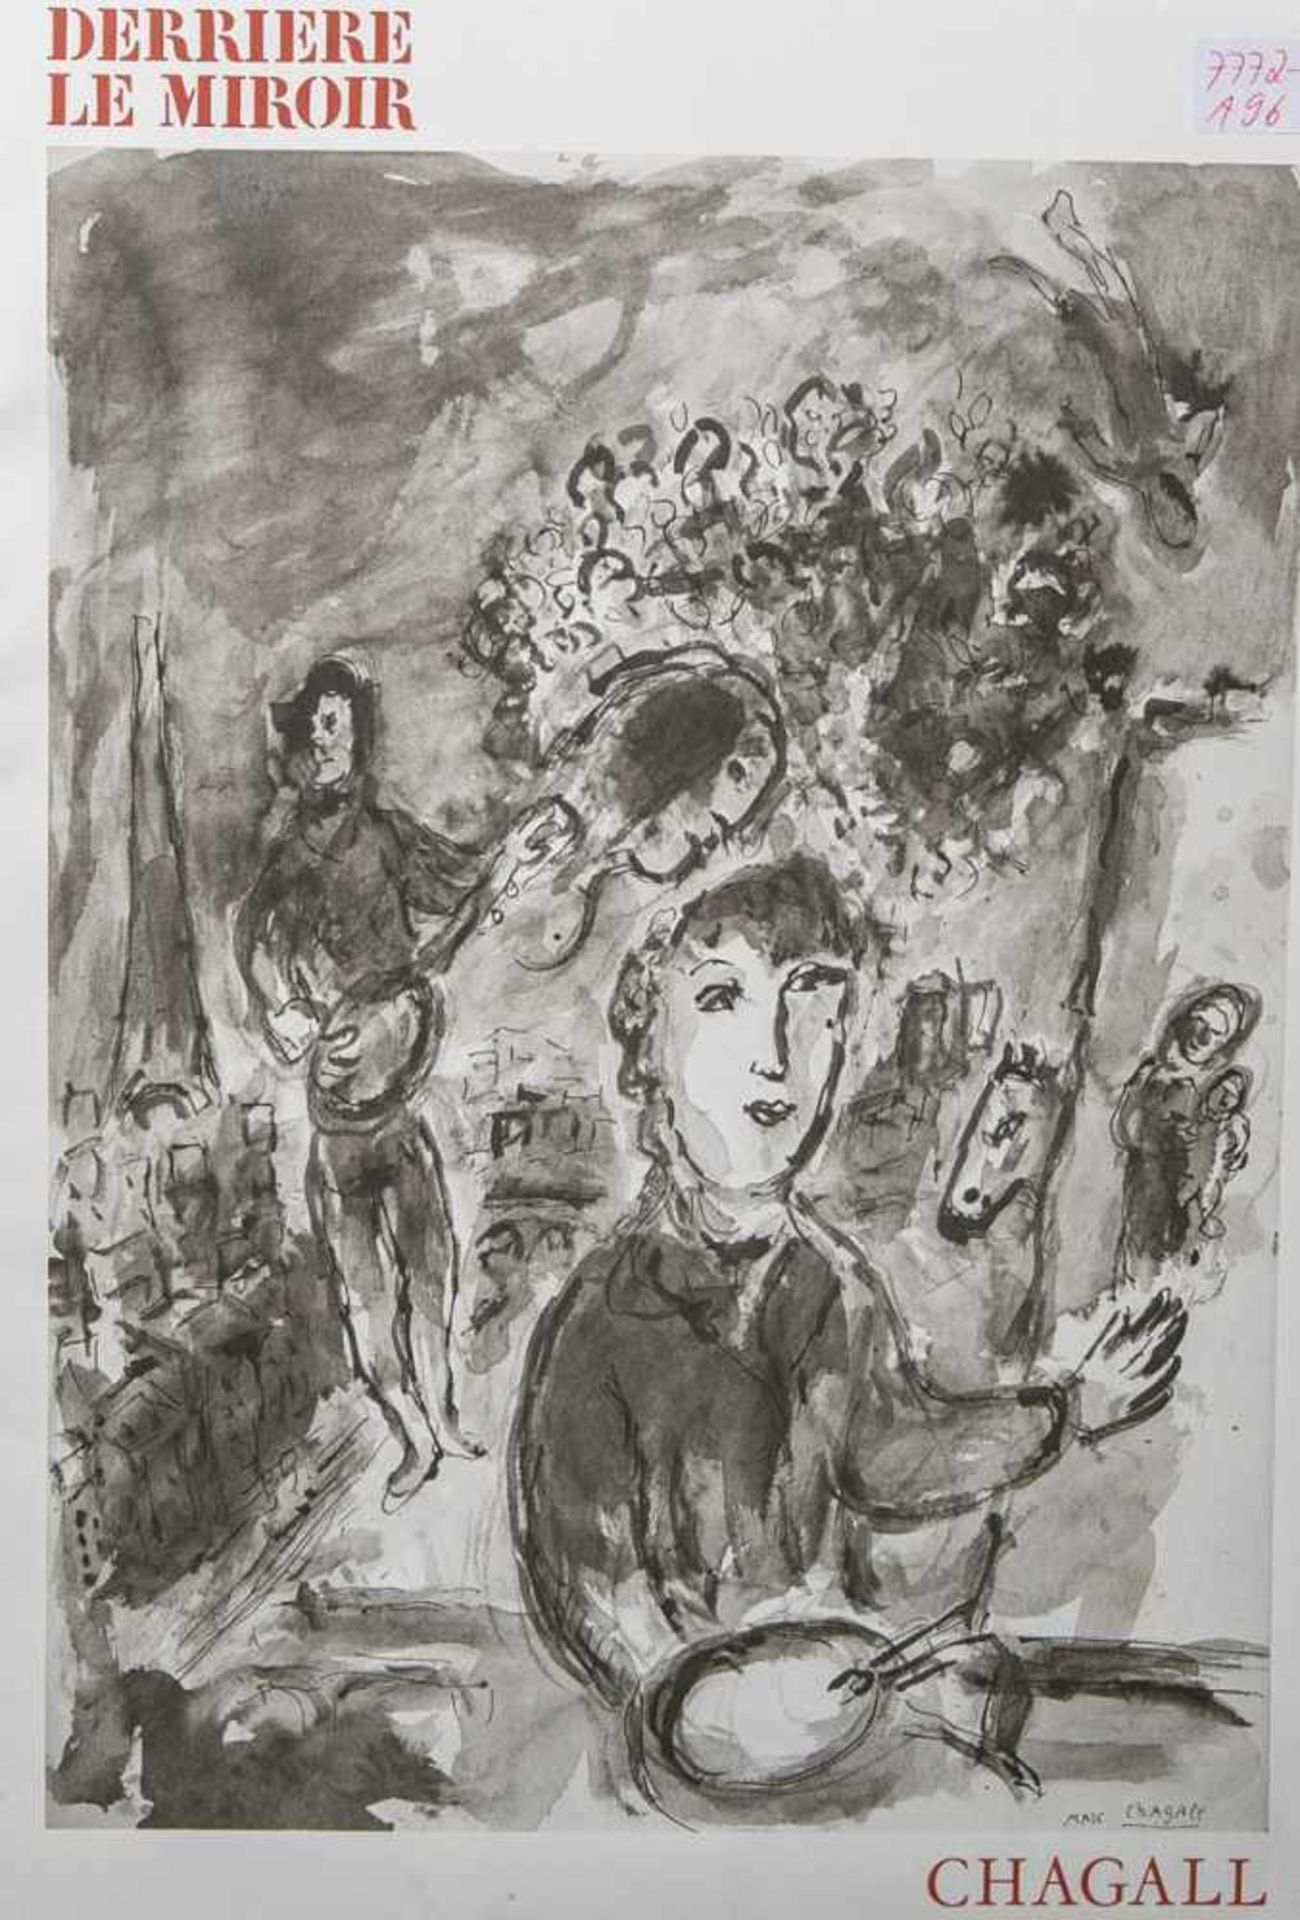 Marc Chagall-Mappe, "Derriére le miroir", Edition 1977 (Paris), Edition Maeght, Nr. 225,<